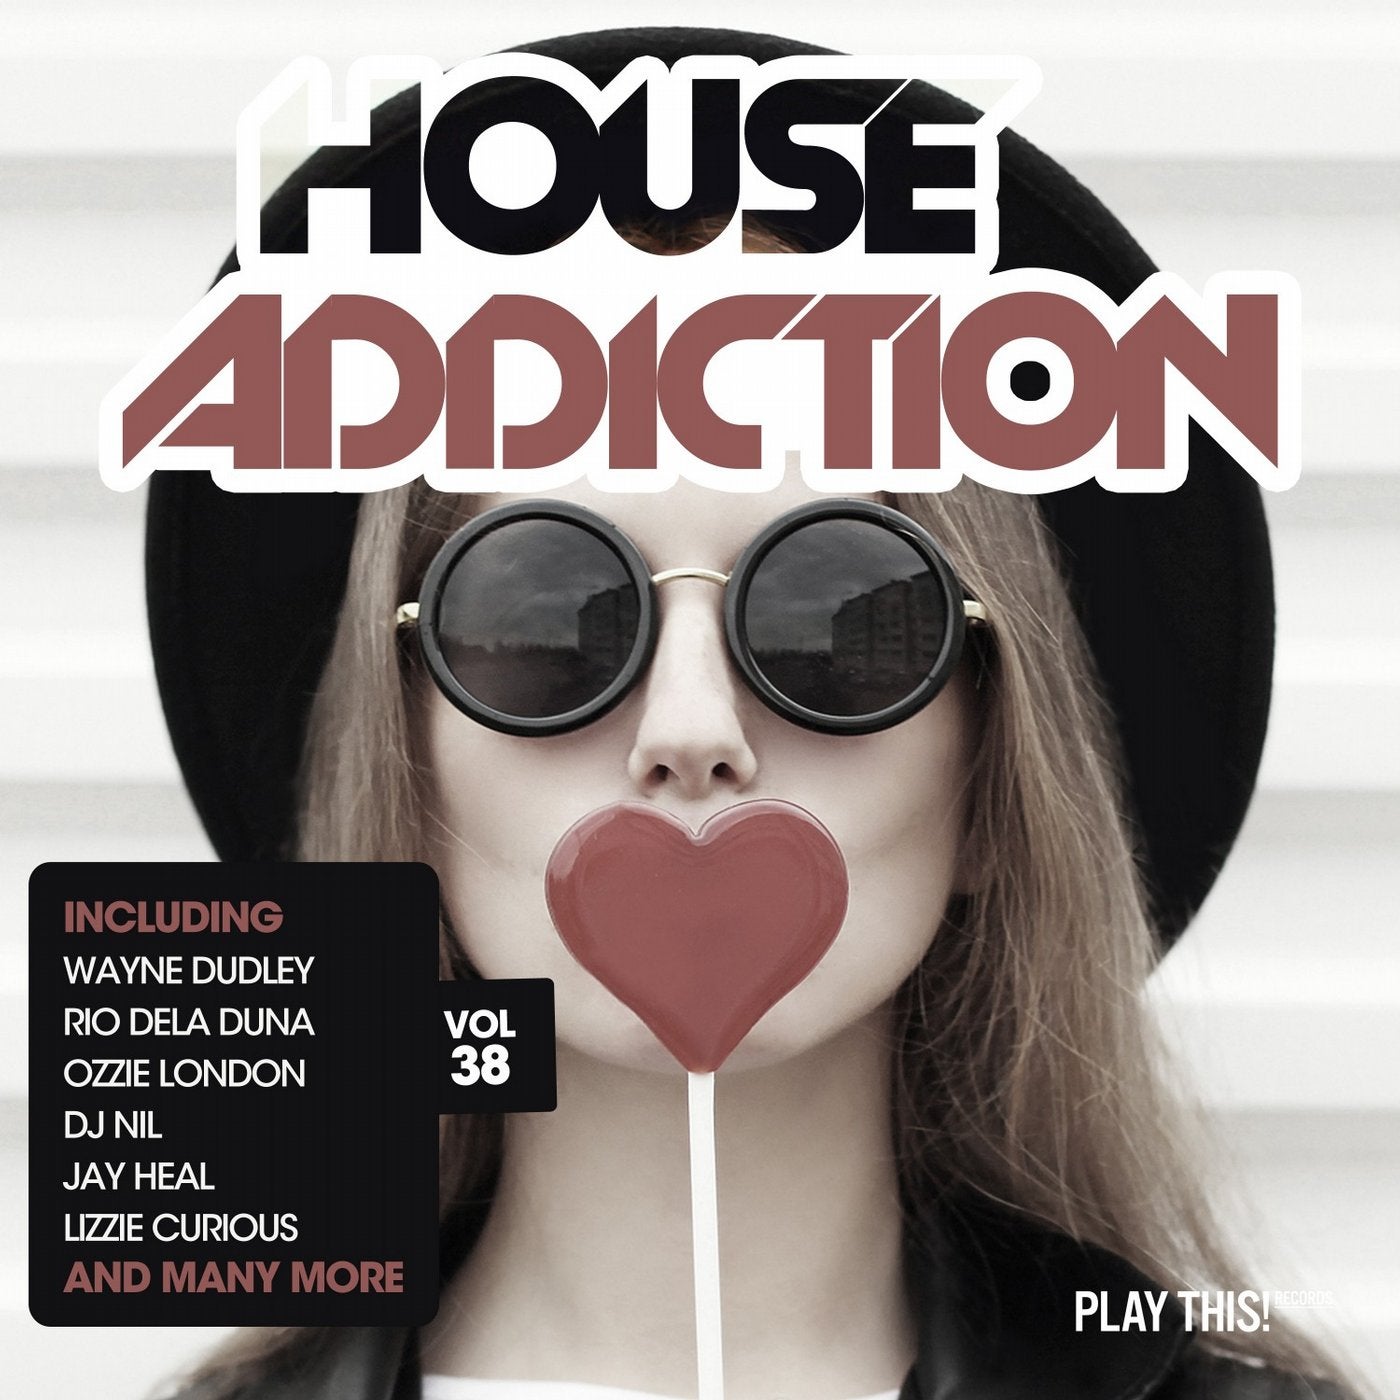 House Addiction Vol. 38